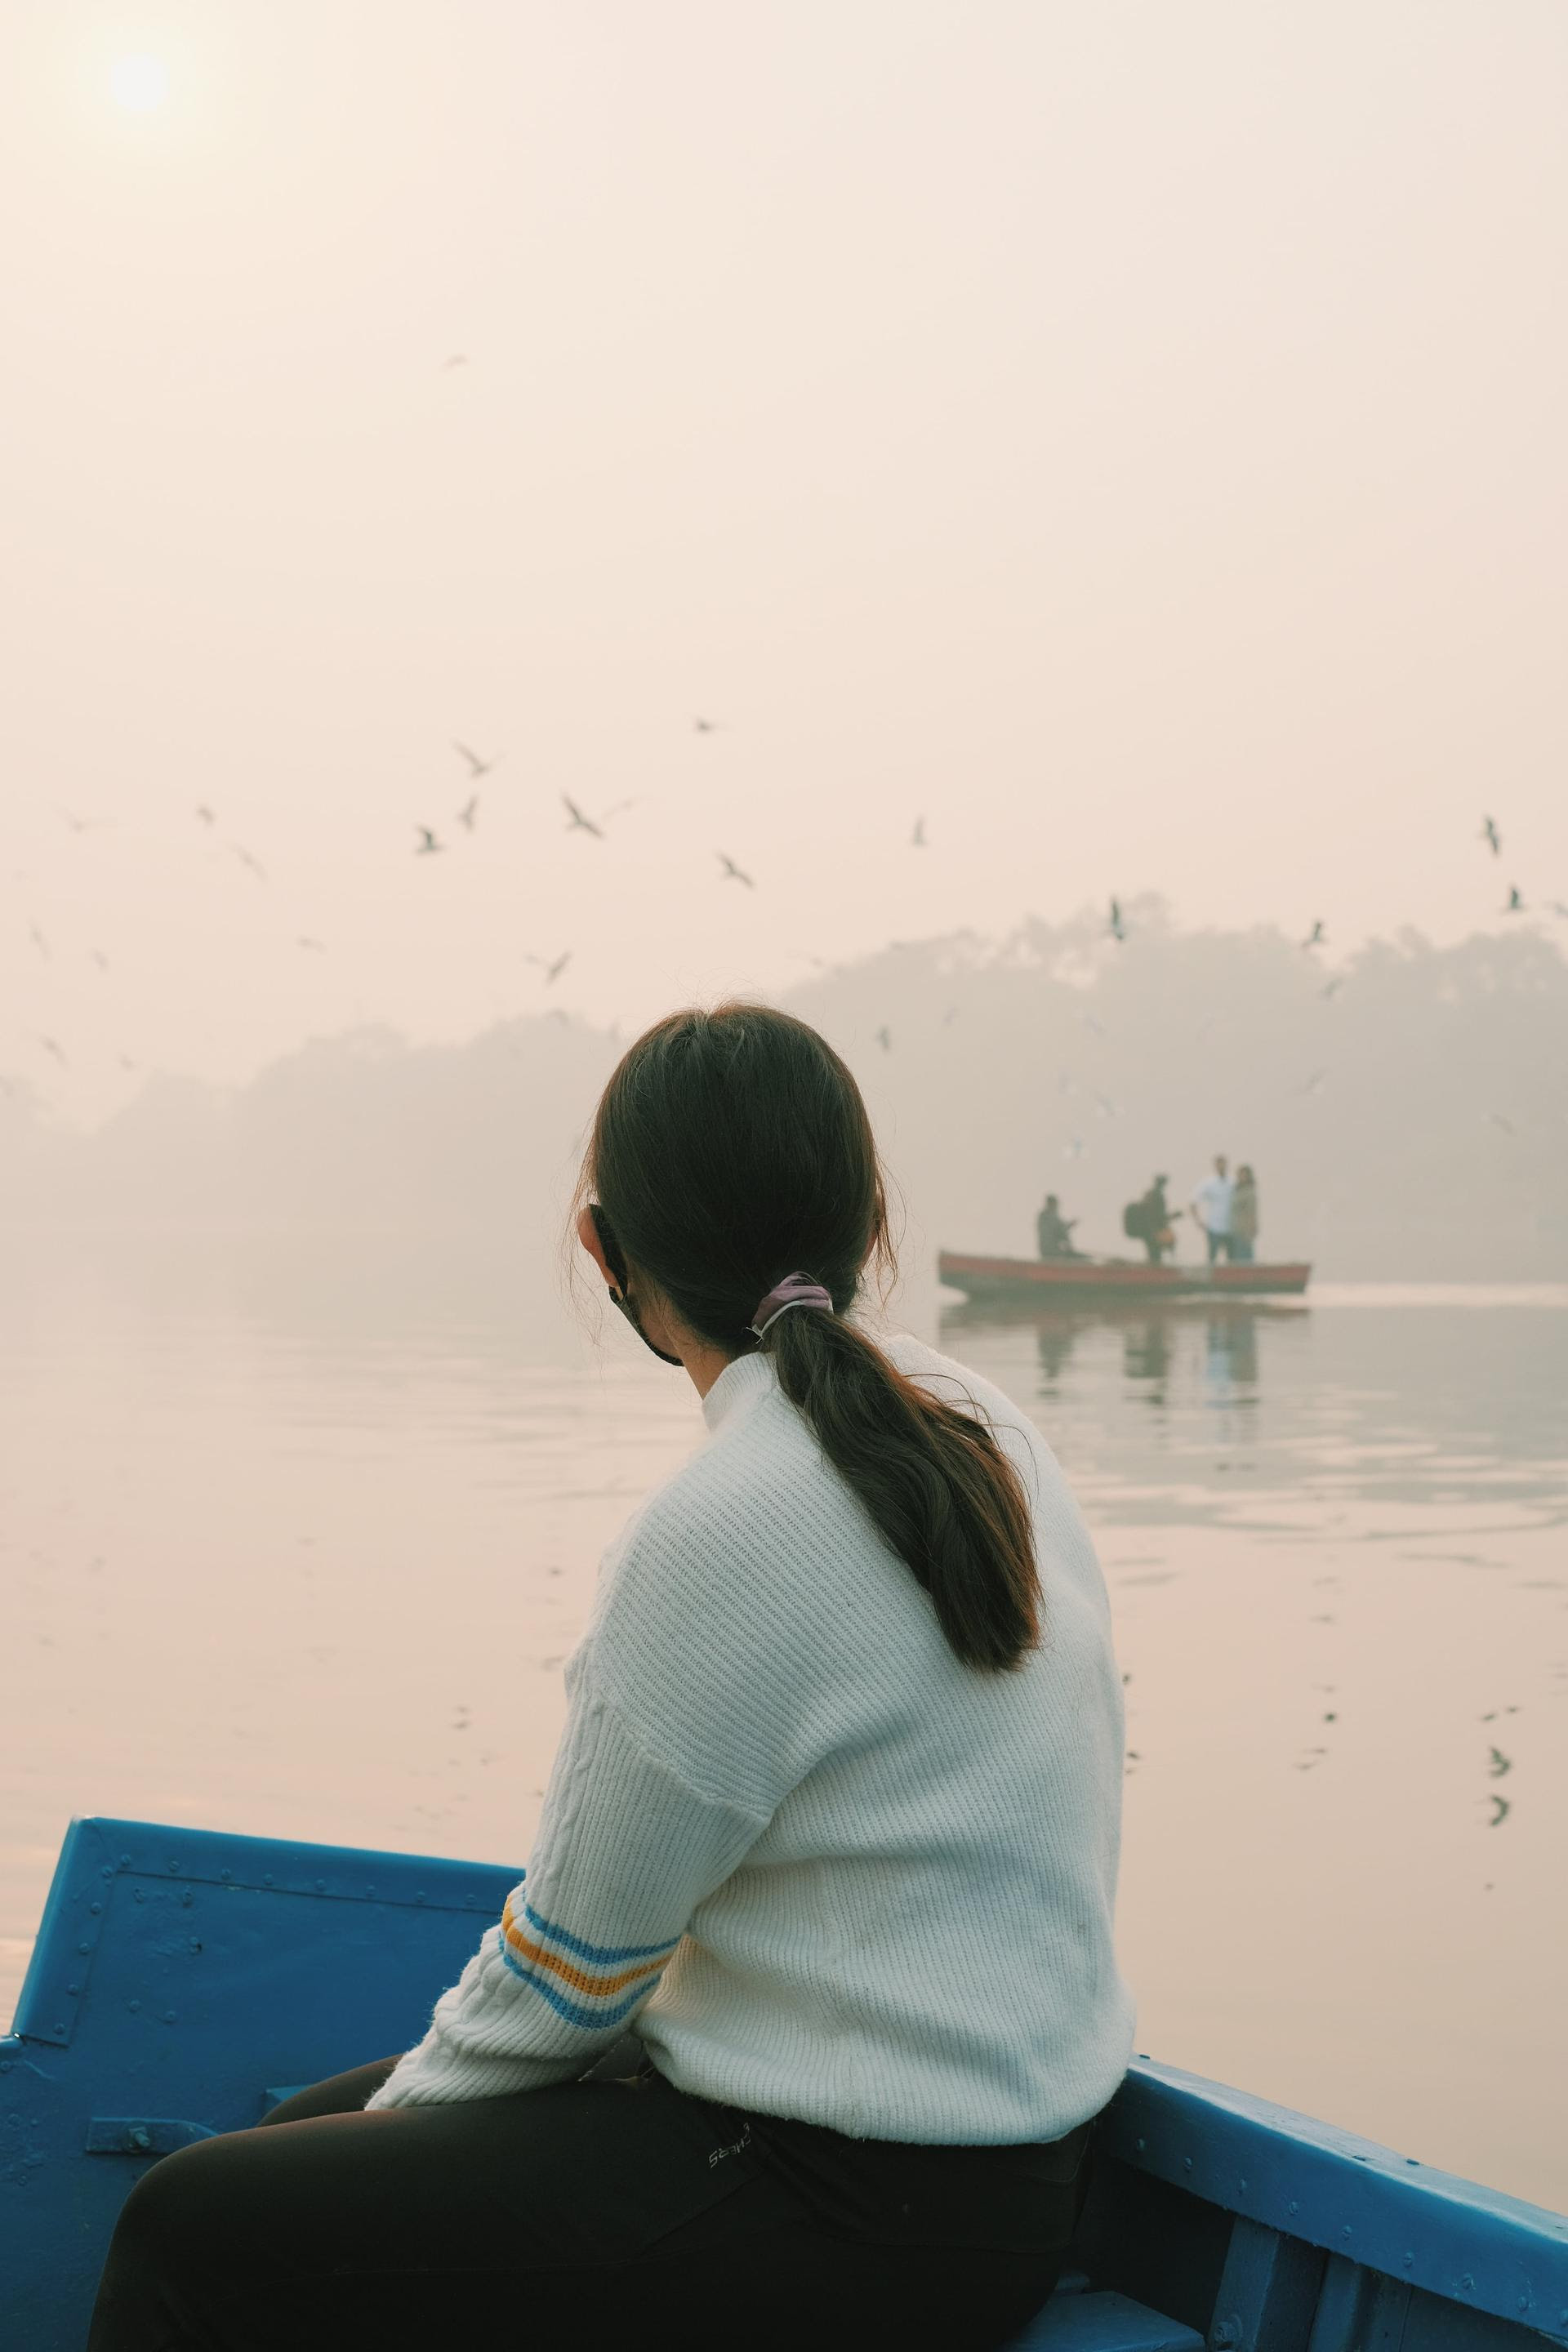 Femme regardant la mer avec un bateau au loin